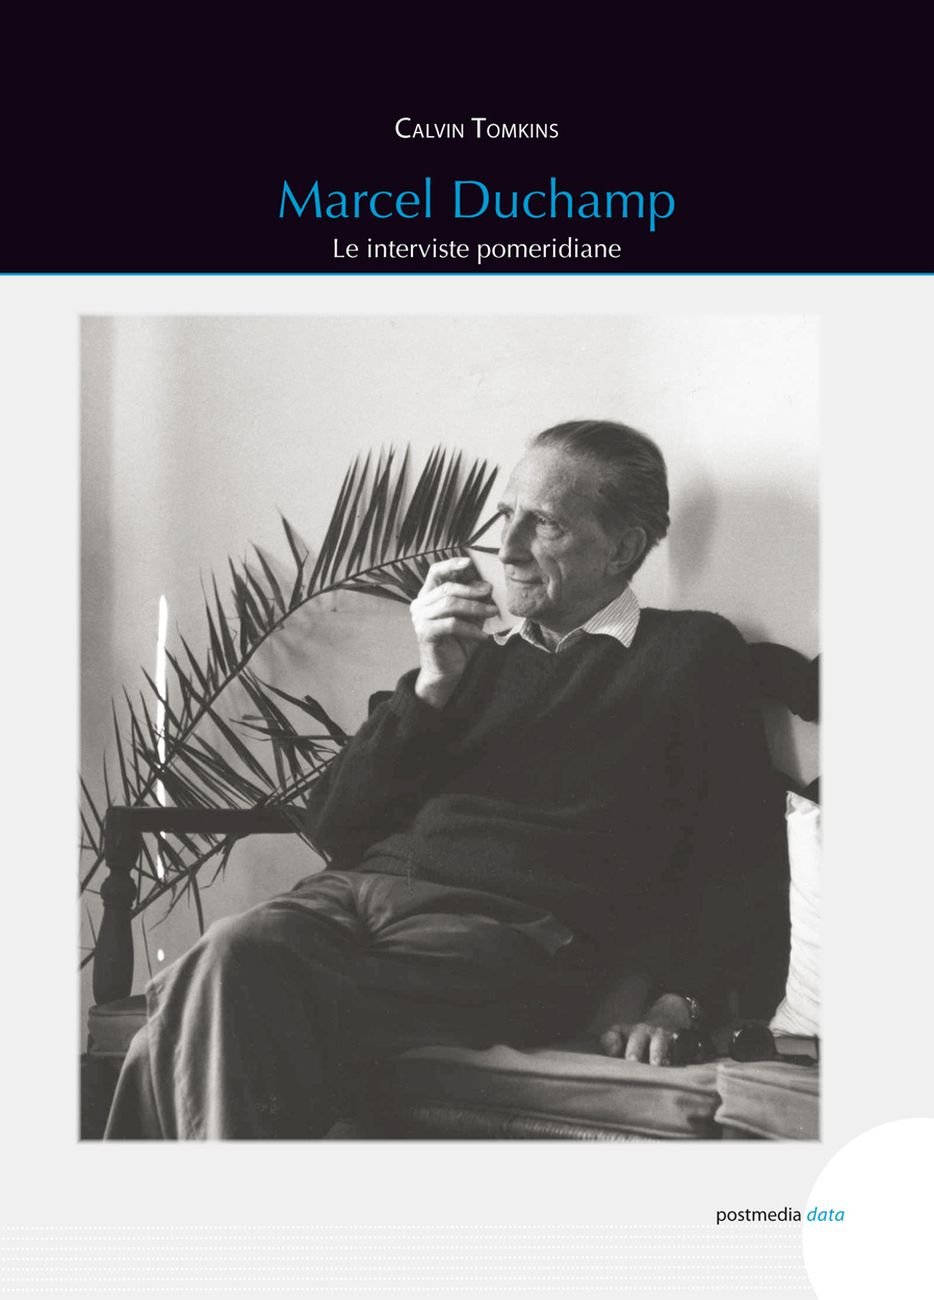 Calvin Tomkins ‒ Marcel Duchamp (Postmedia Books, Milano 2020)